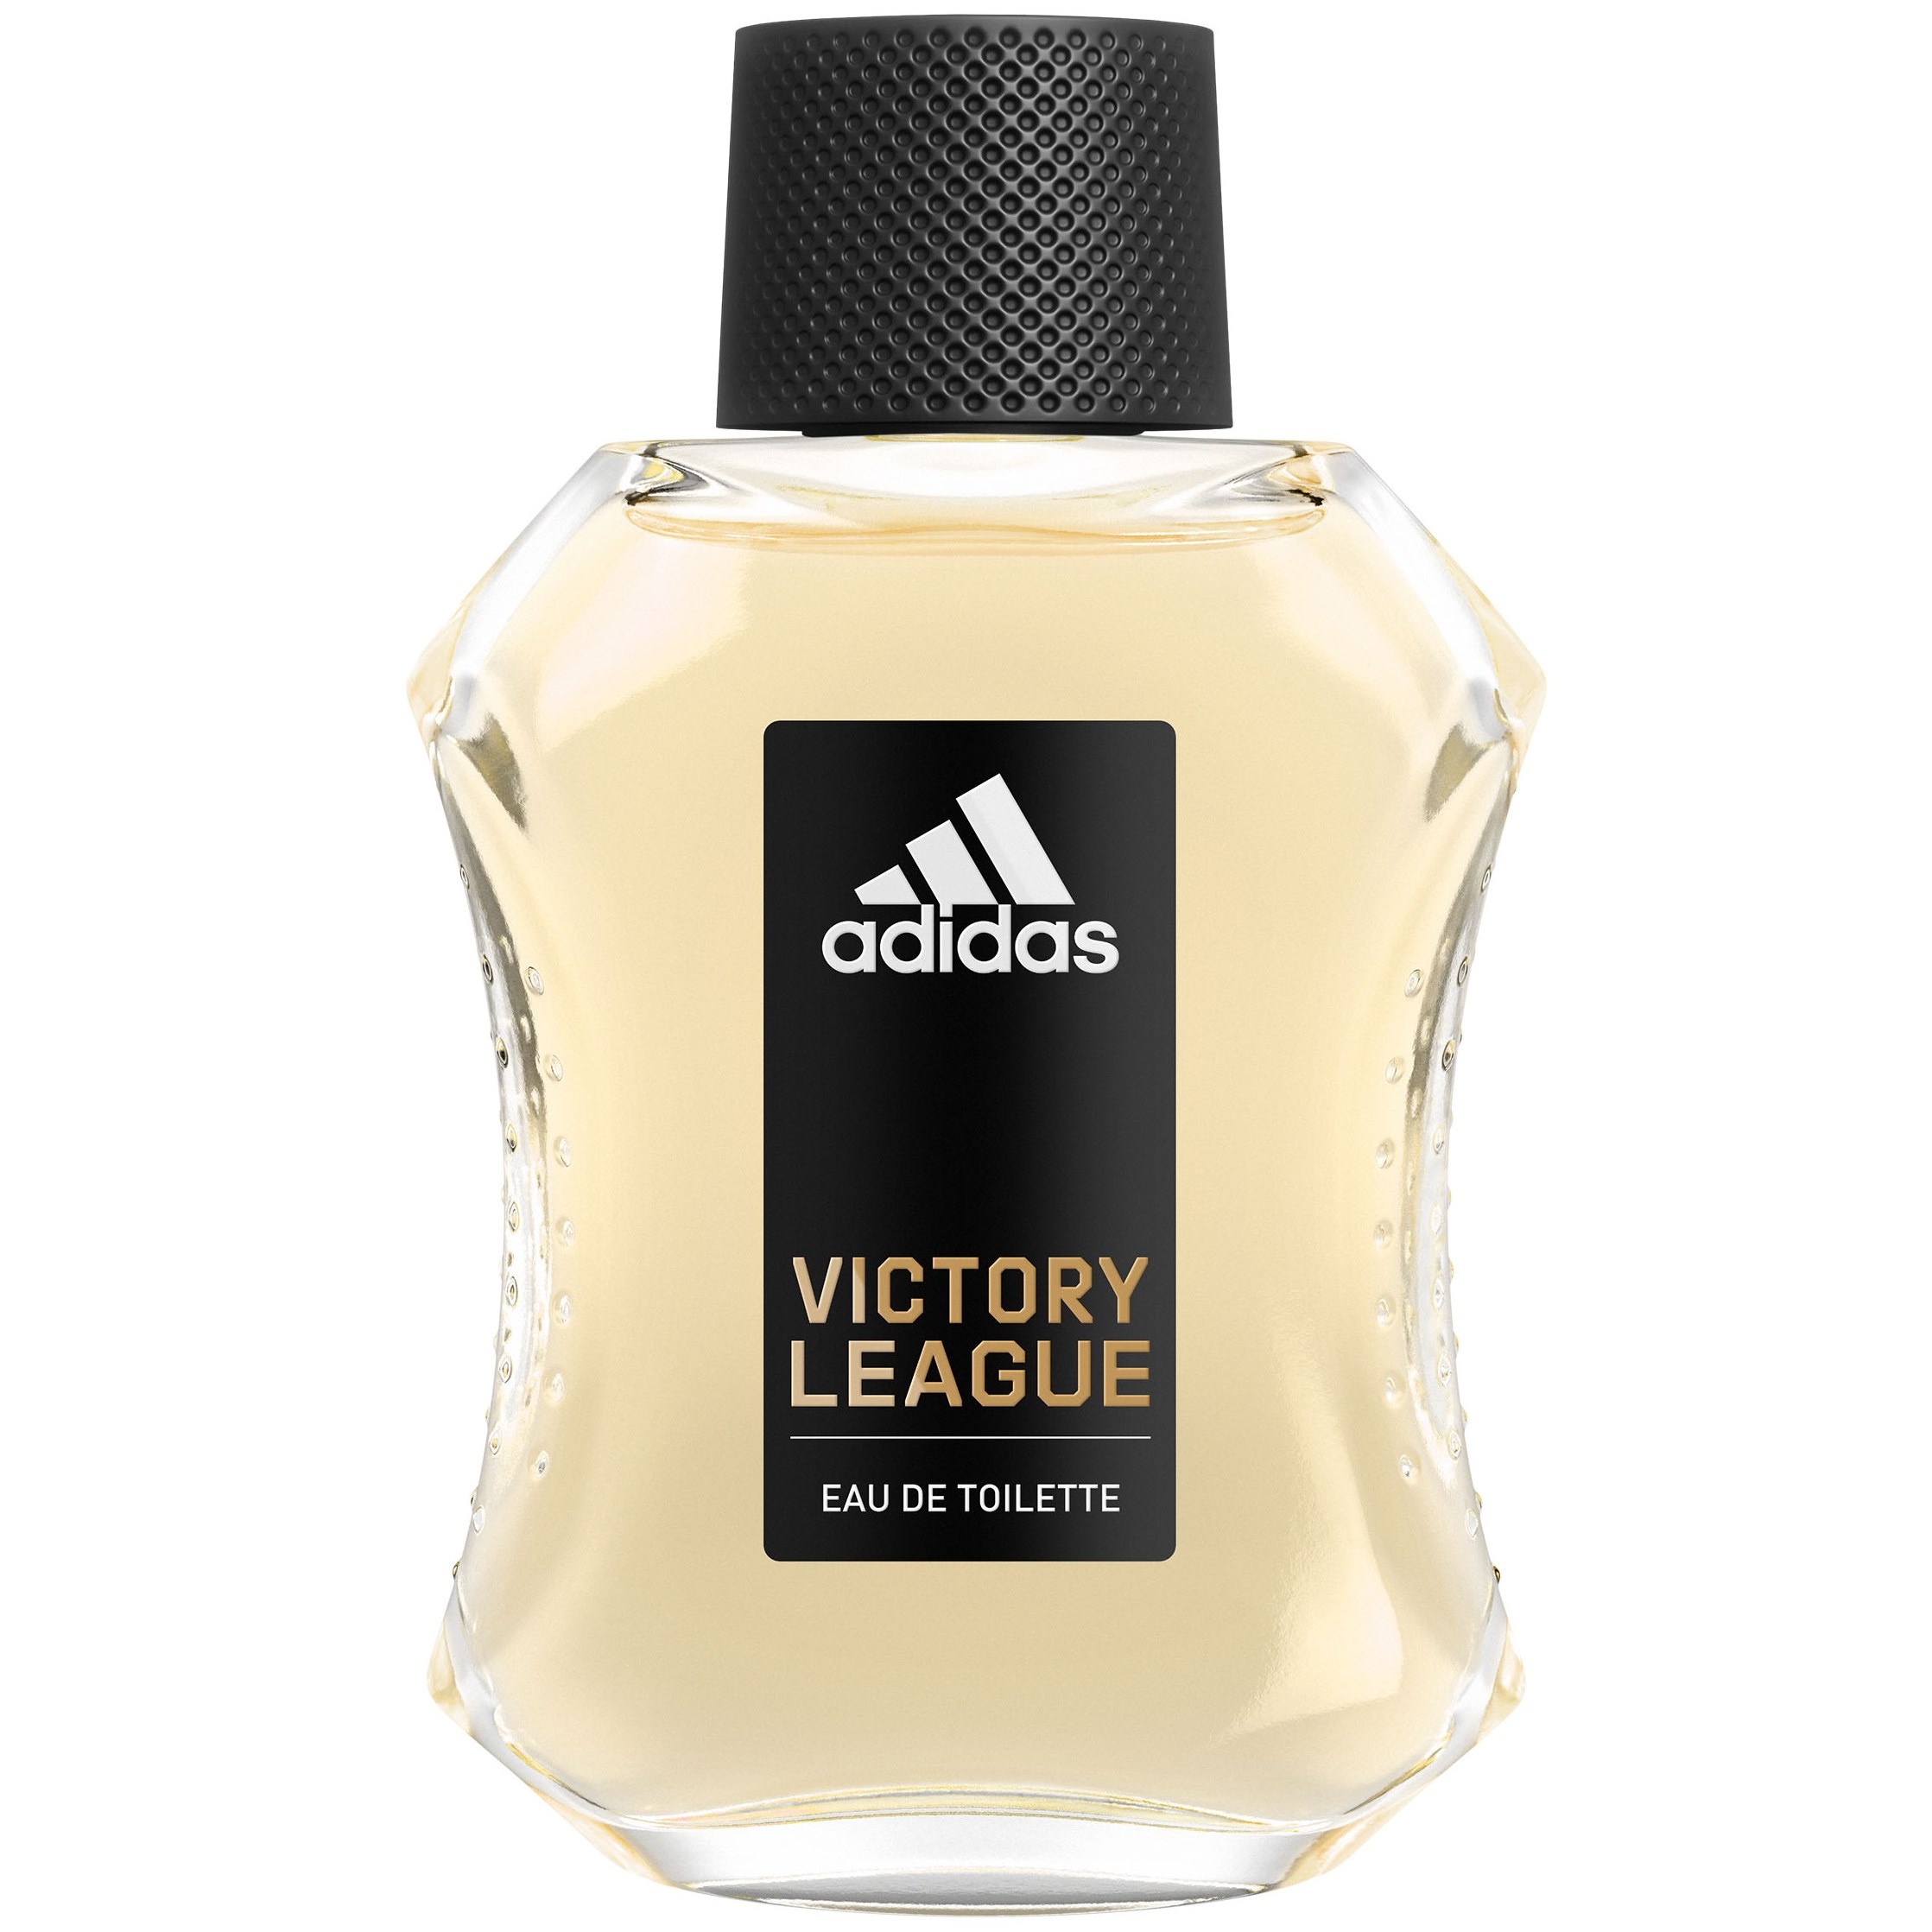 Zdjęcia - Perfuma męska Adidas Victory League Eau de Toilette For Him 100 ml 